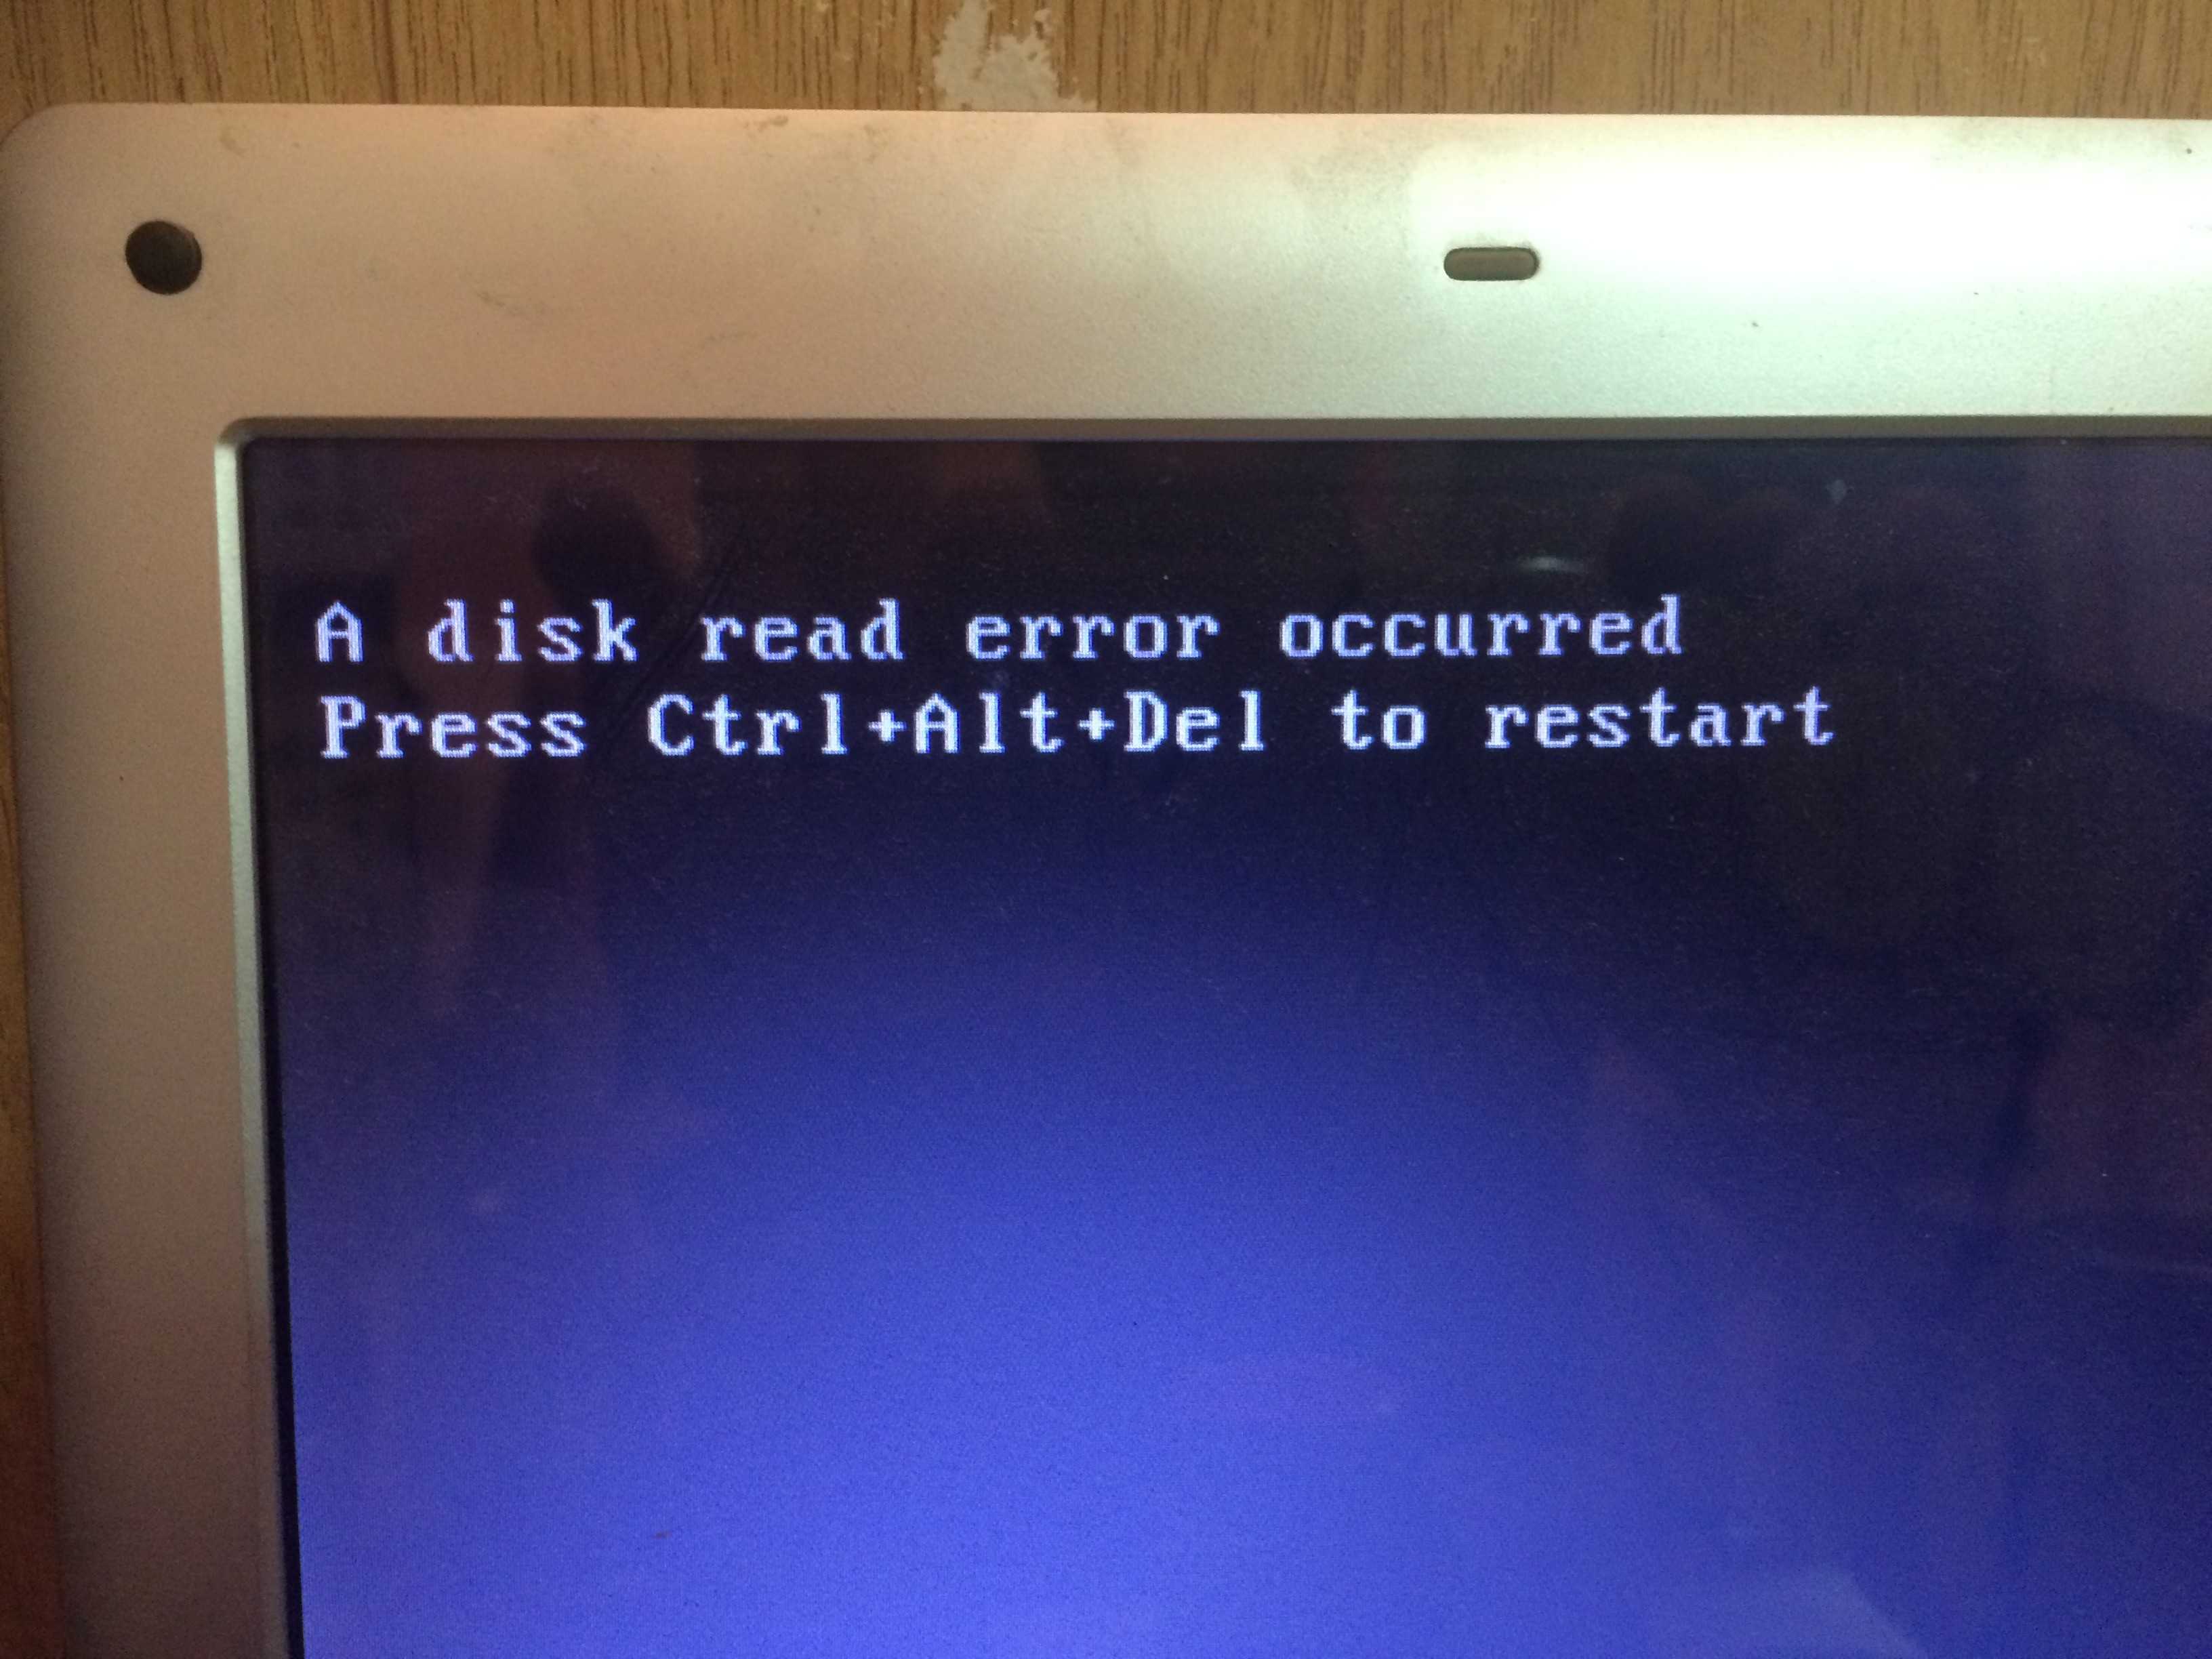 A disk read error occurred press ctrl alt del – универсальная инструкция по устранению